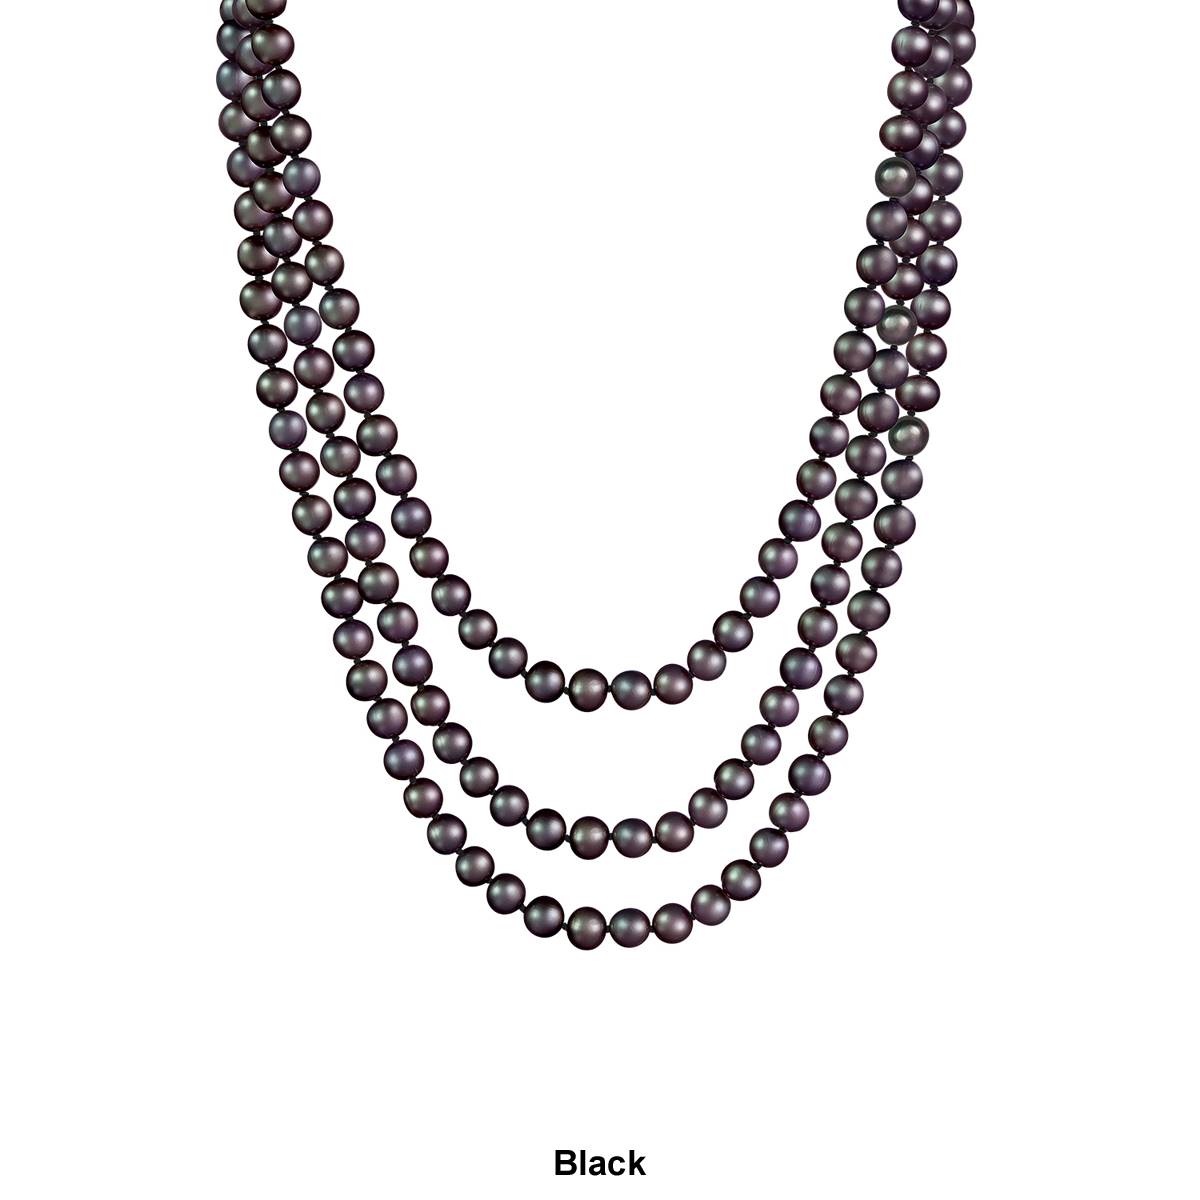 Splendid Pearls Endless 100 Freshwater Pearl Necklace